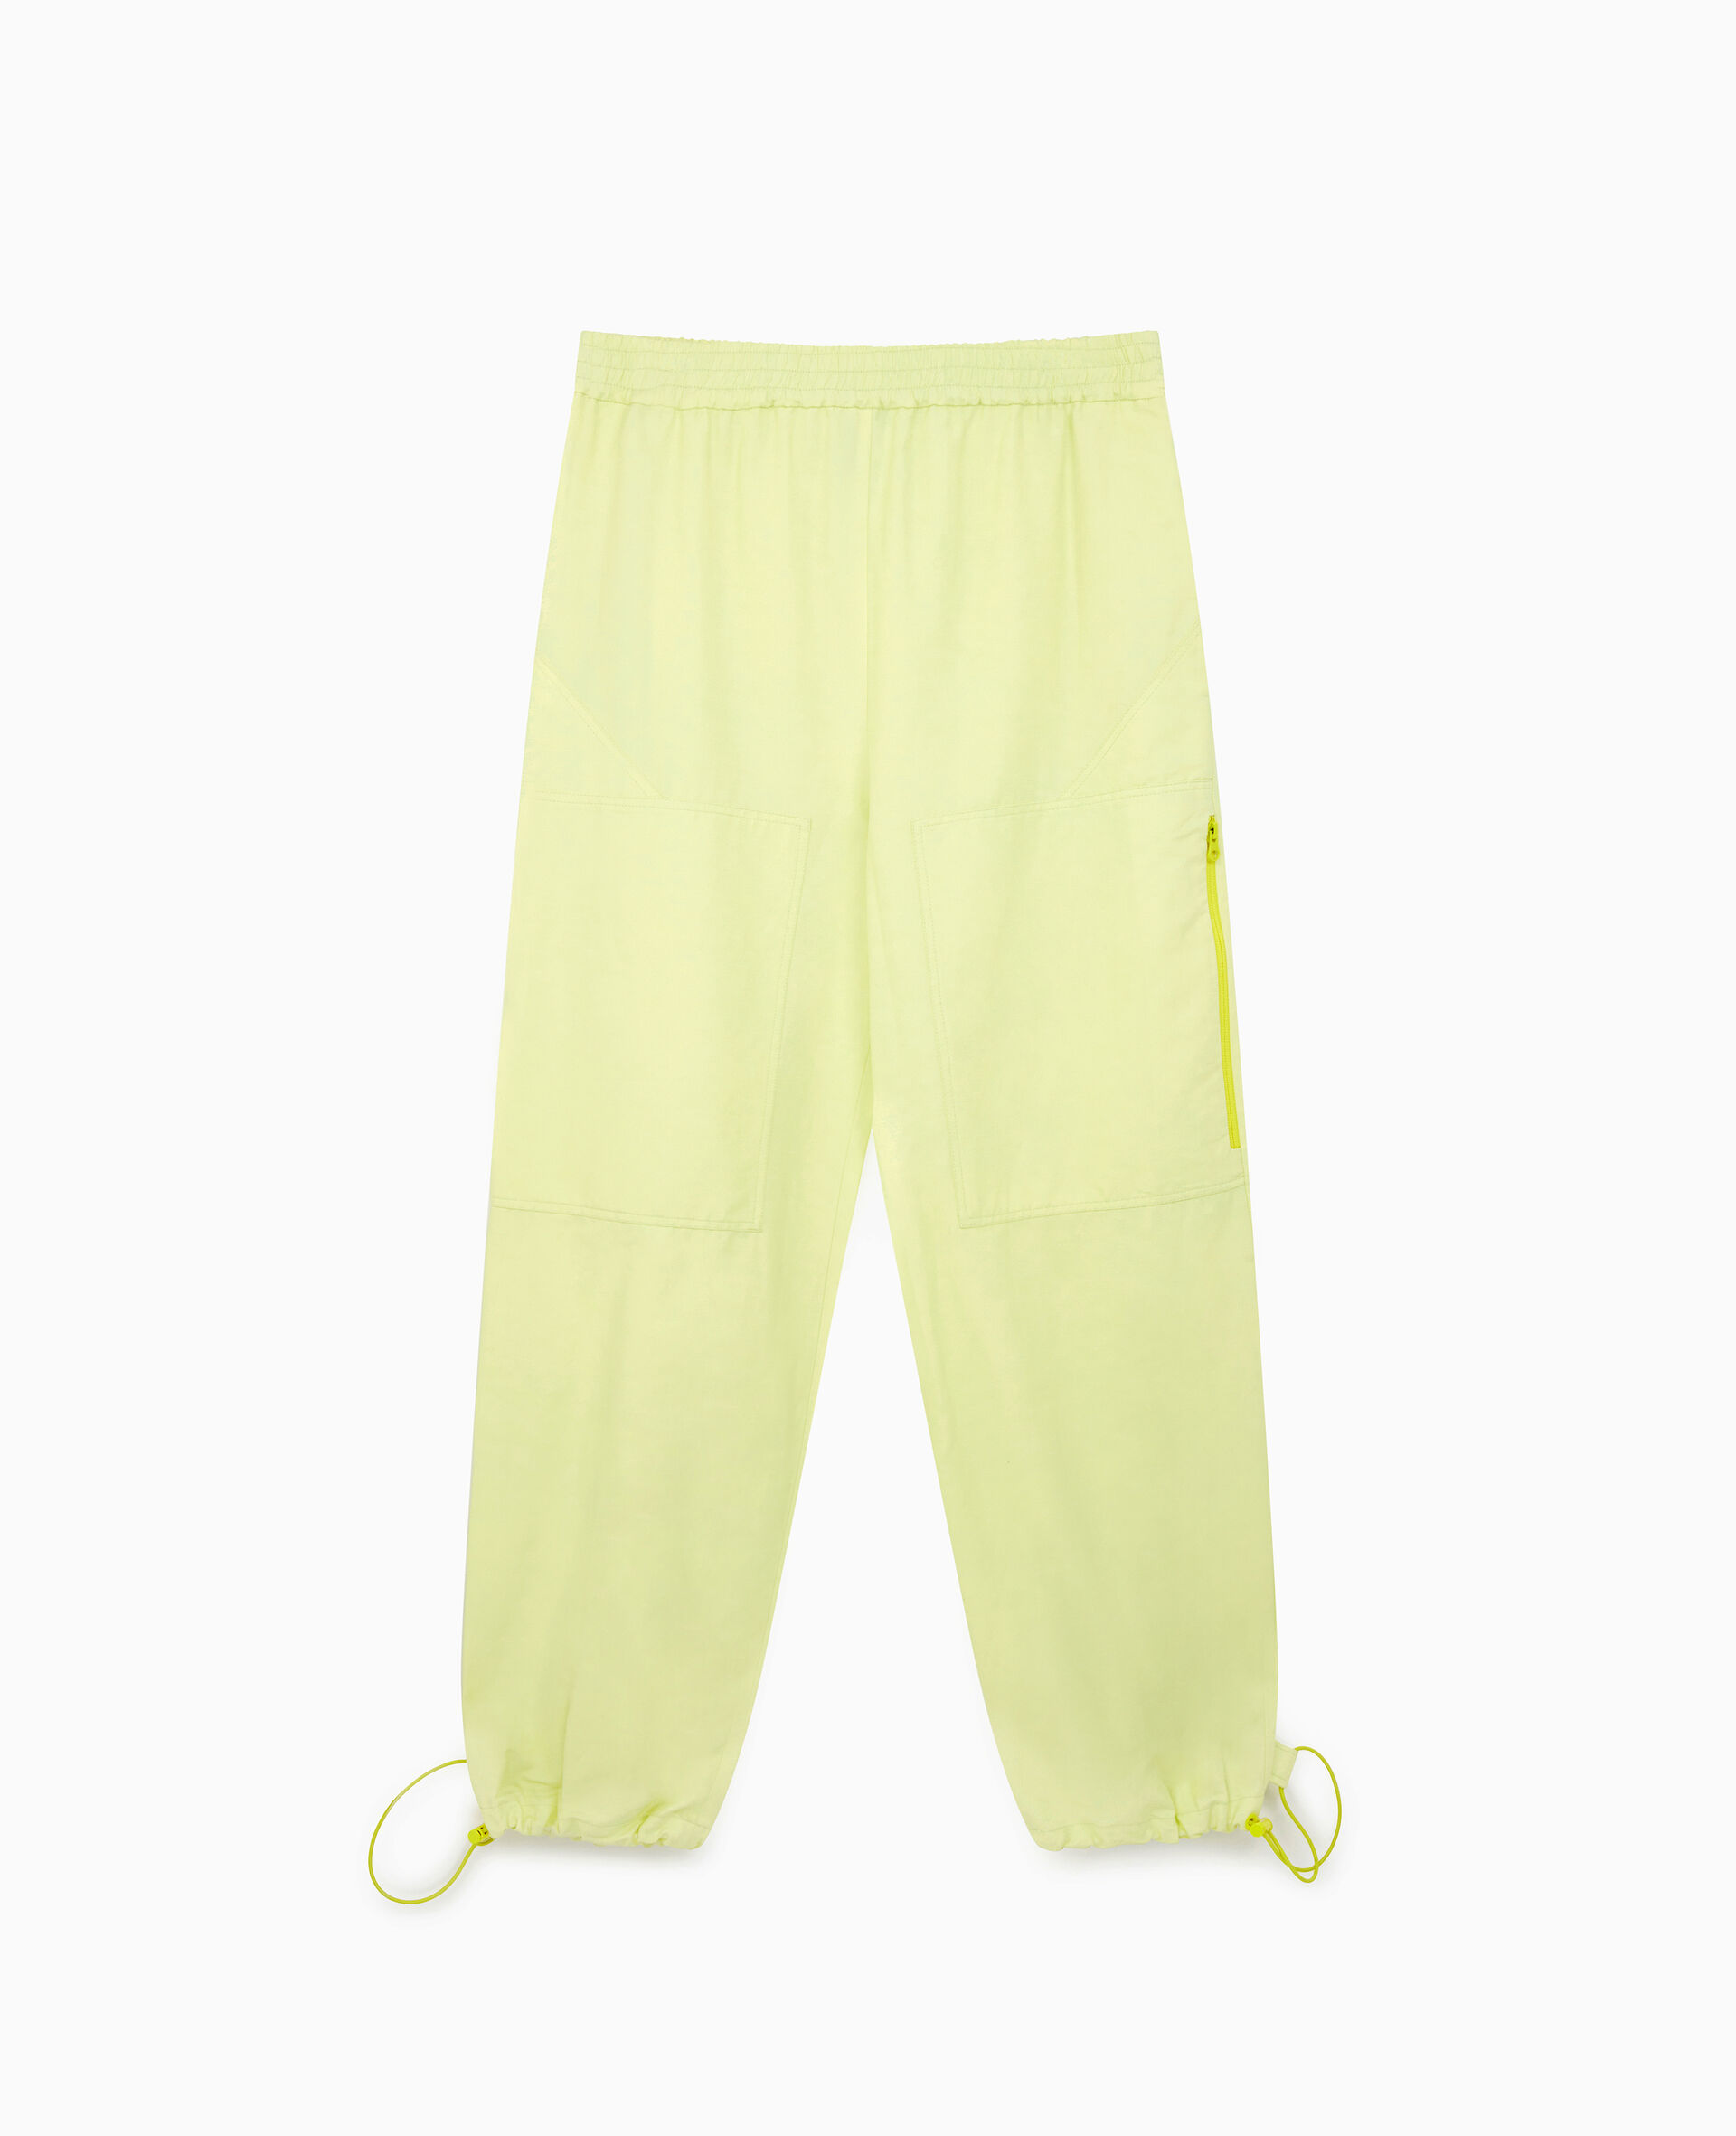 Zip Pocket Pants-Yellow-large image number 0